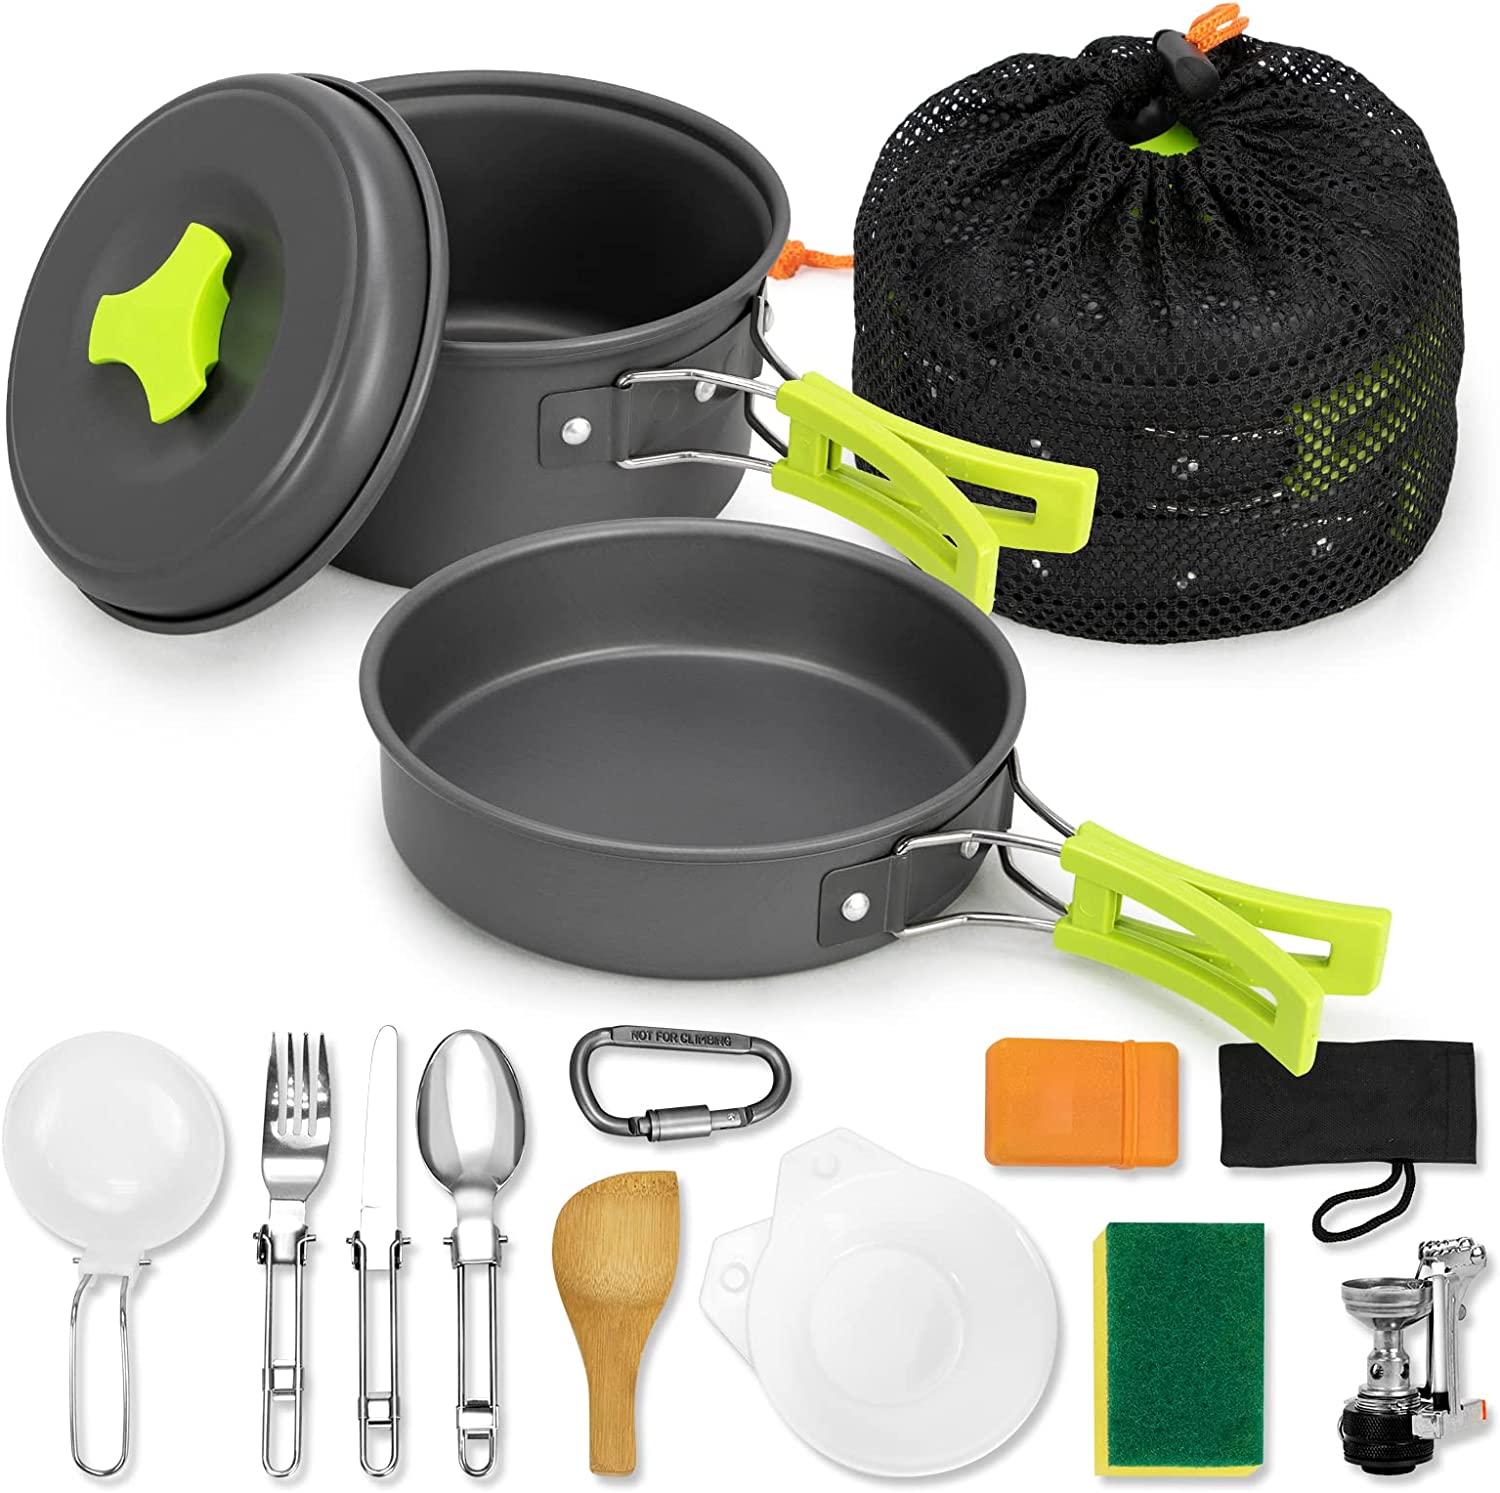 Rlrueyal 15pcs Camping Cookware Mess Kit,Non-Stick Lightweight Pots Set Portable Outdoor Cookware for Camping Backpacking Hiking Outdoor Cooking and Picnic